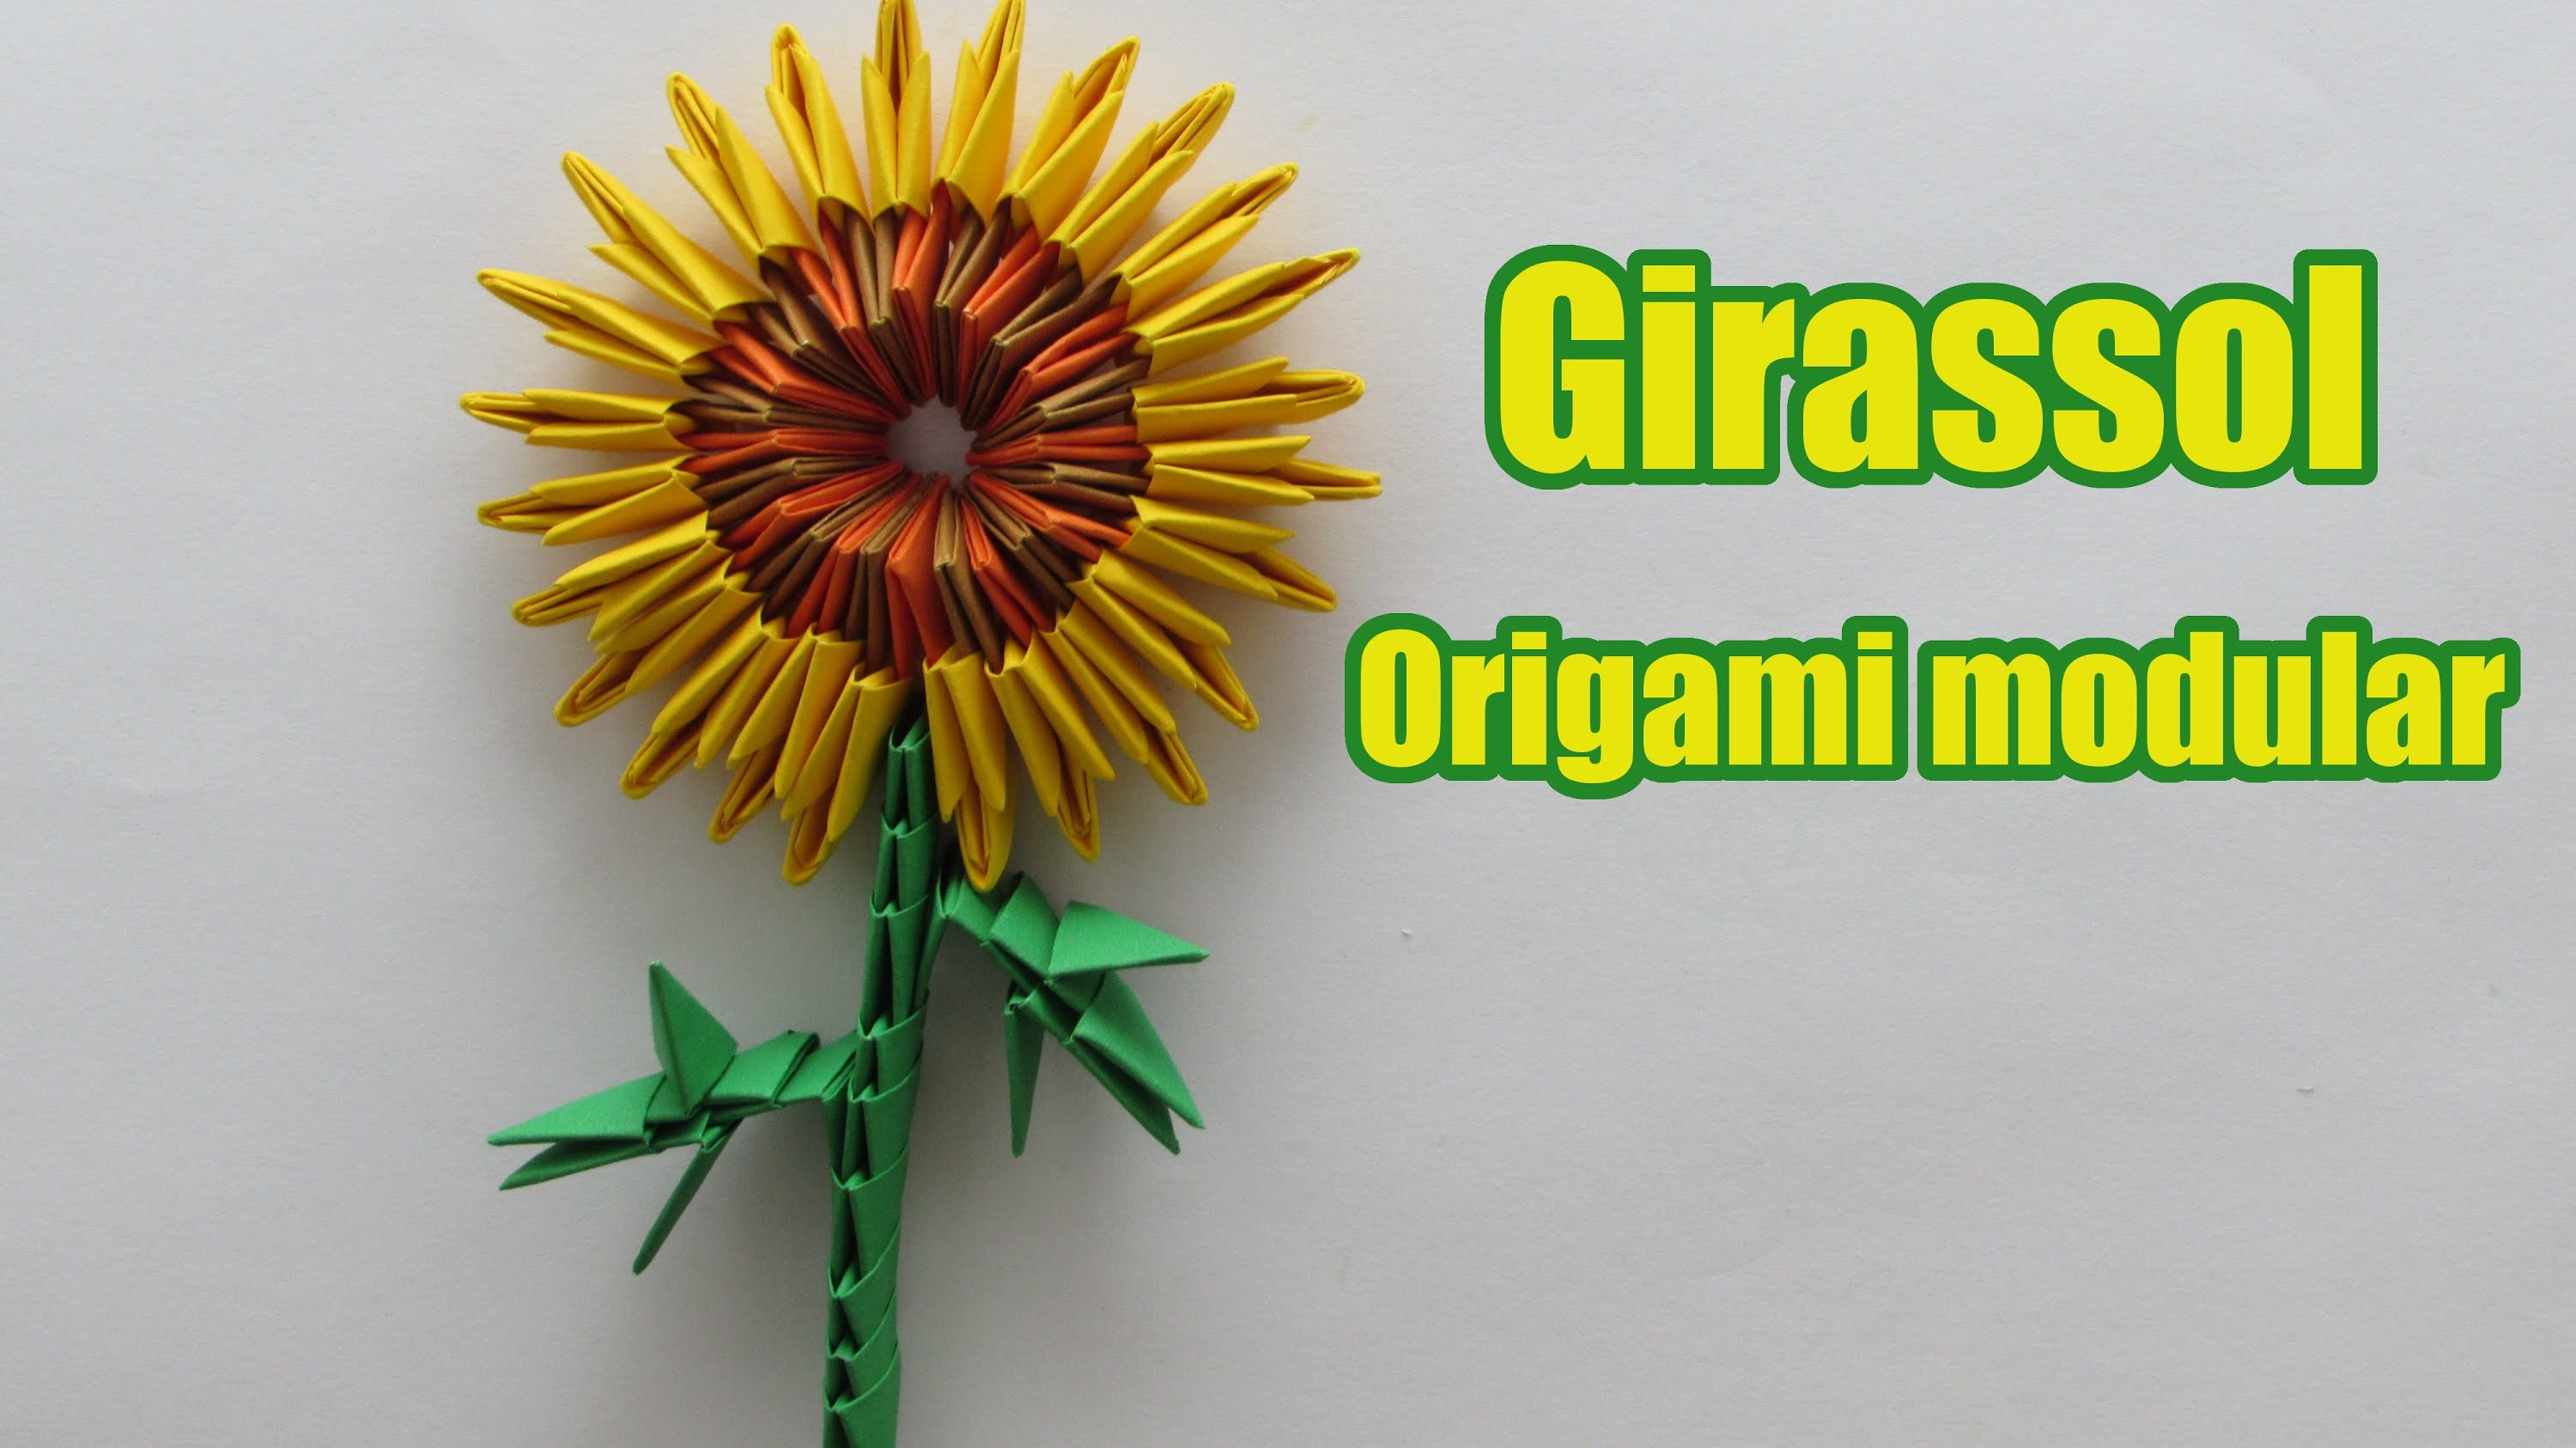 Girassol Origami modular